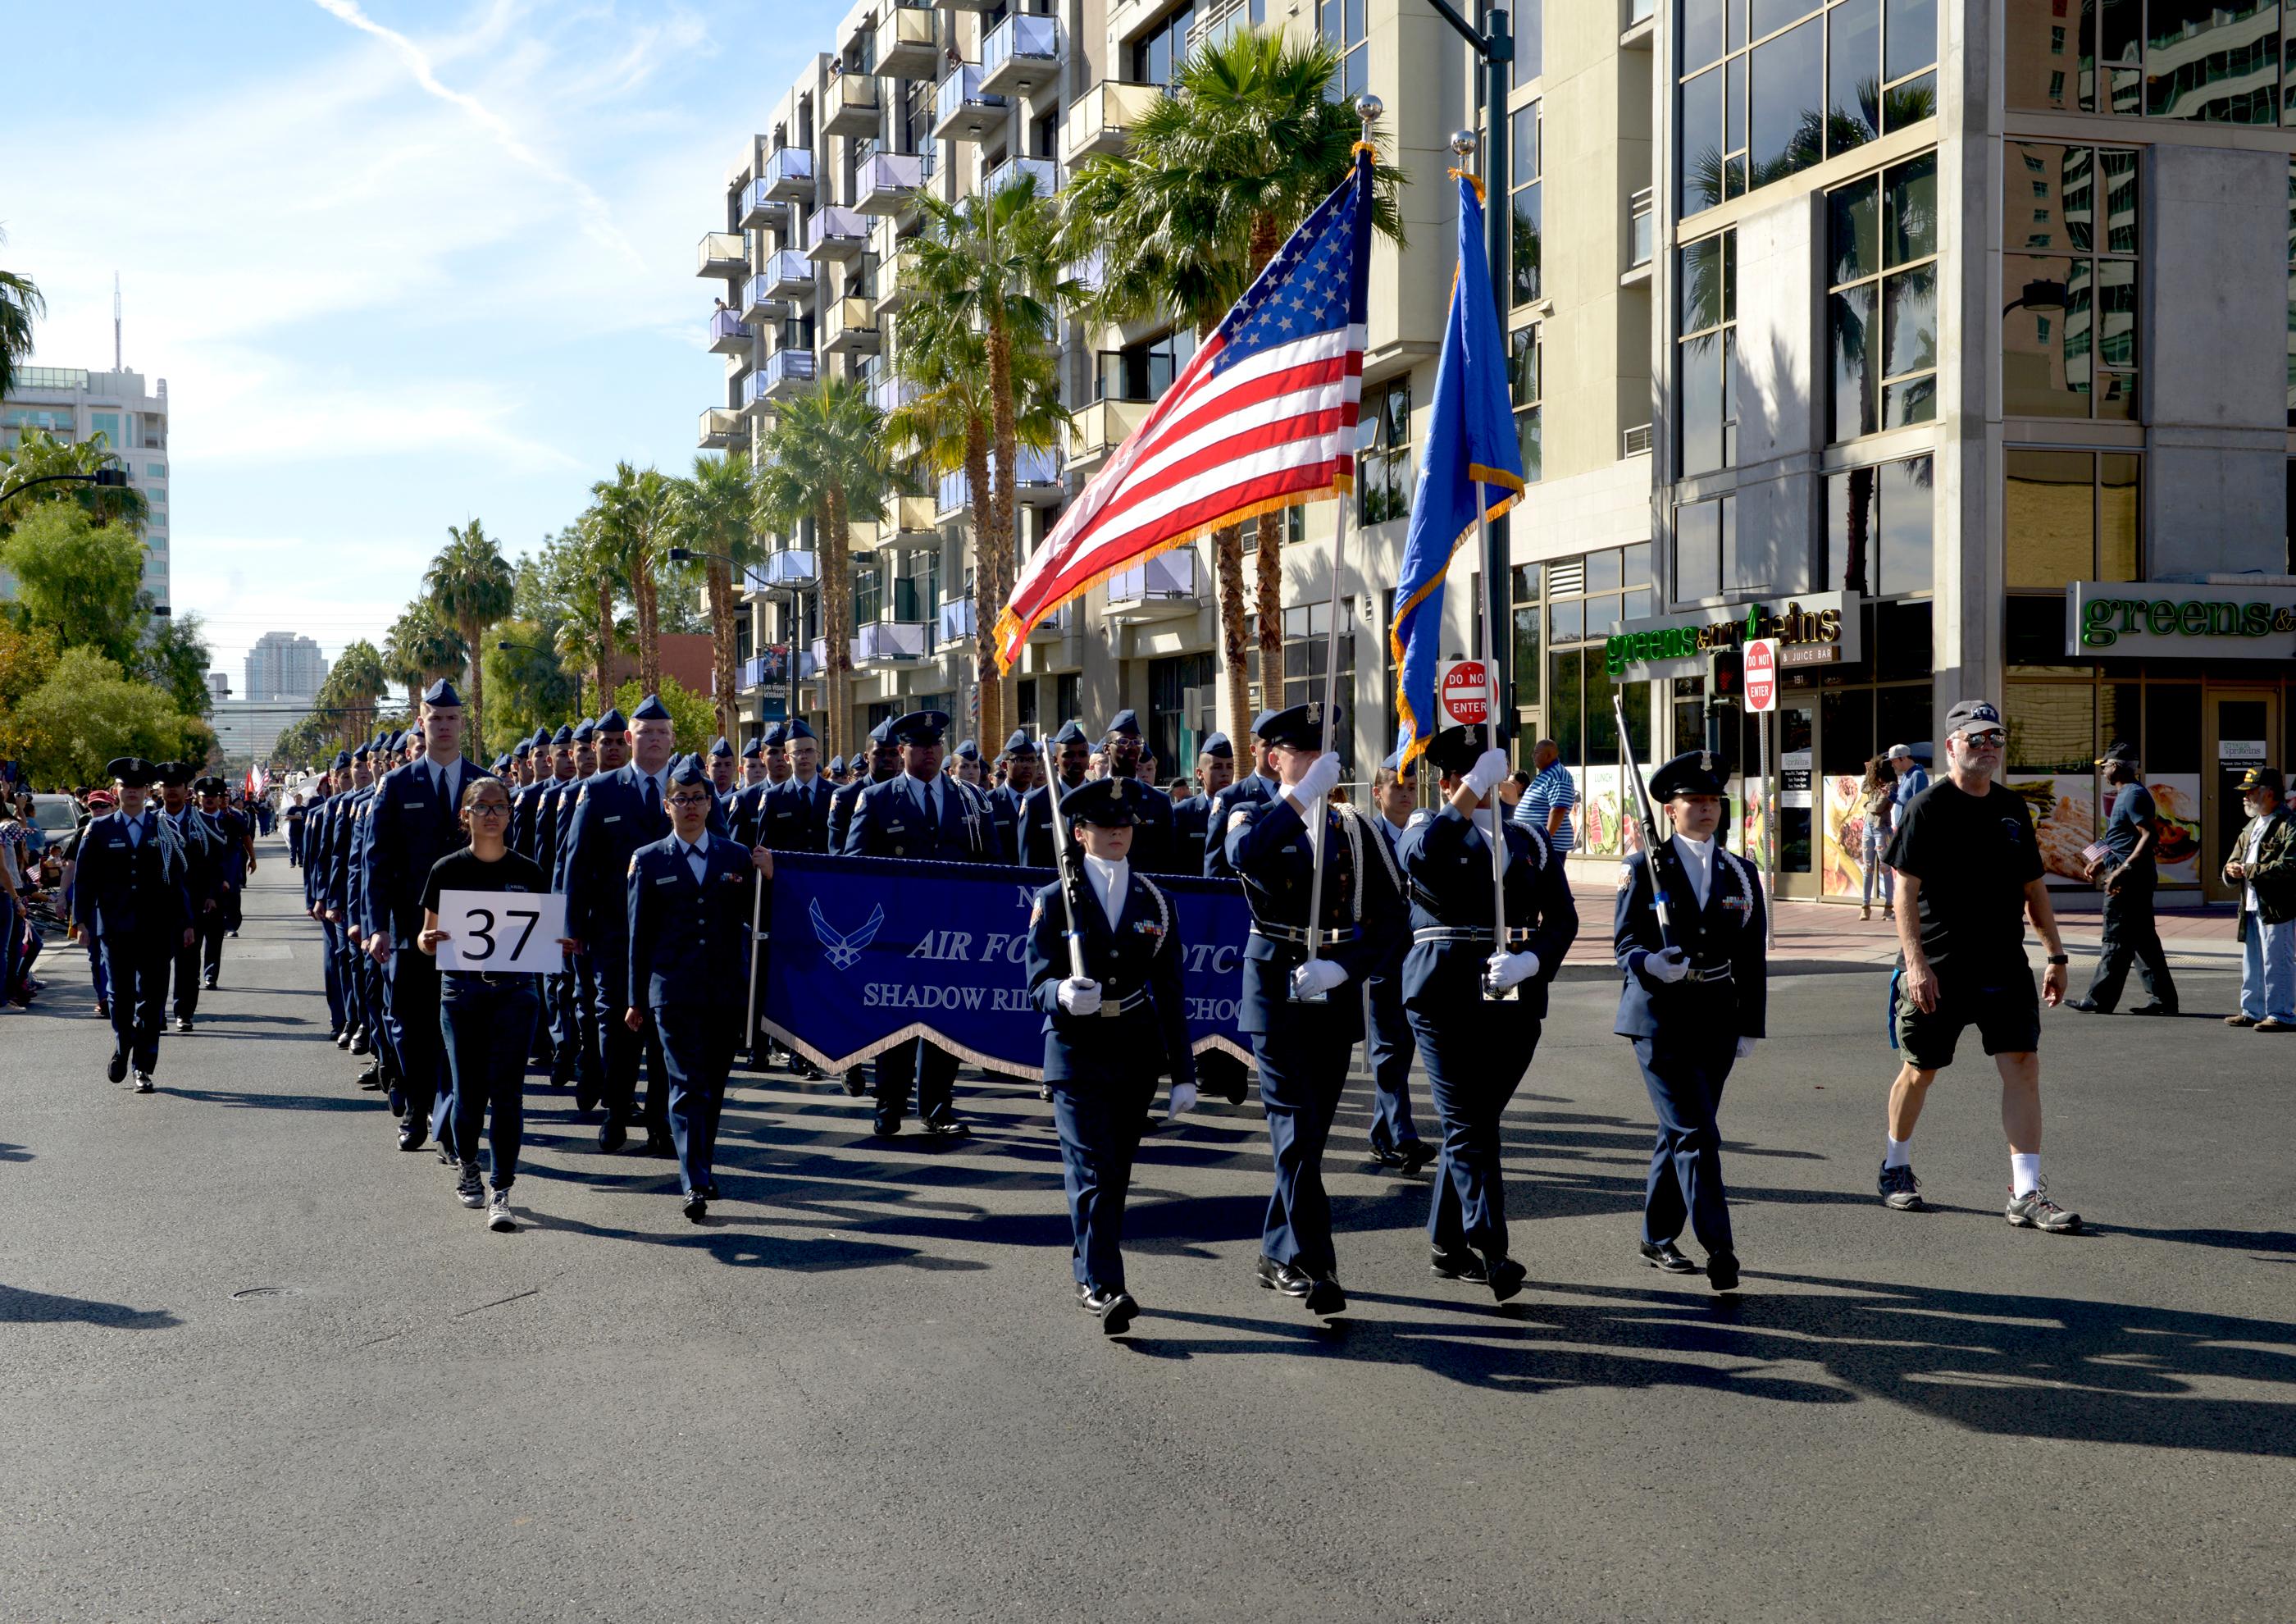 GALLERY Annual Veteran's Day Parade in downtown Las Vegas KSNV